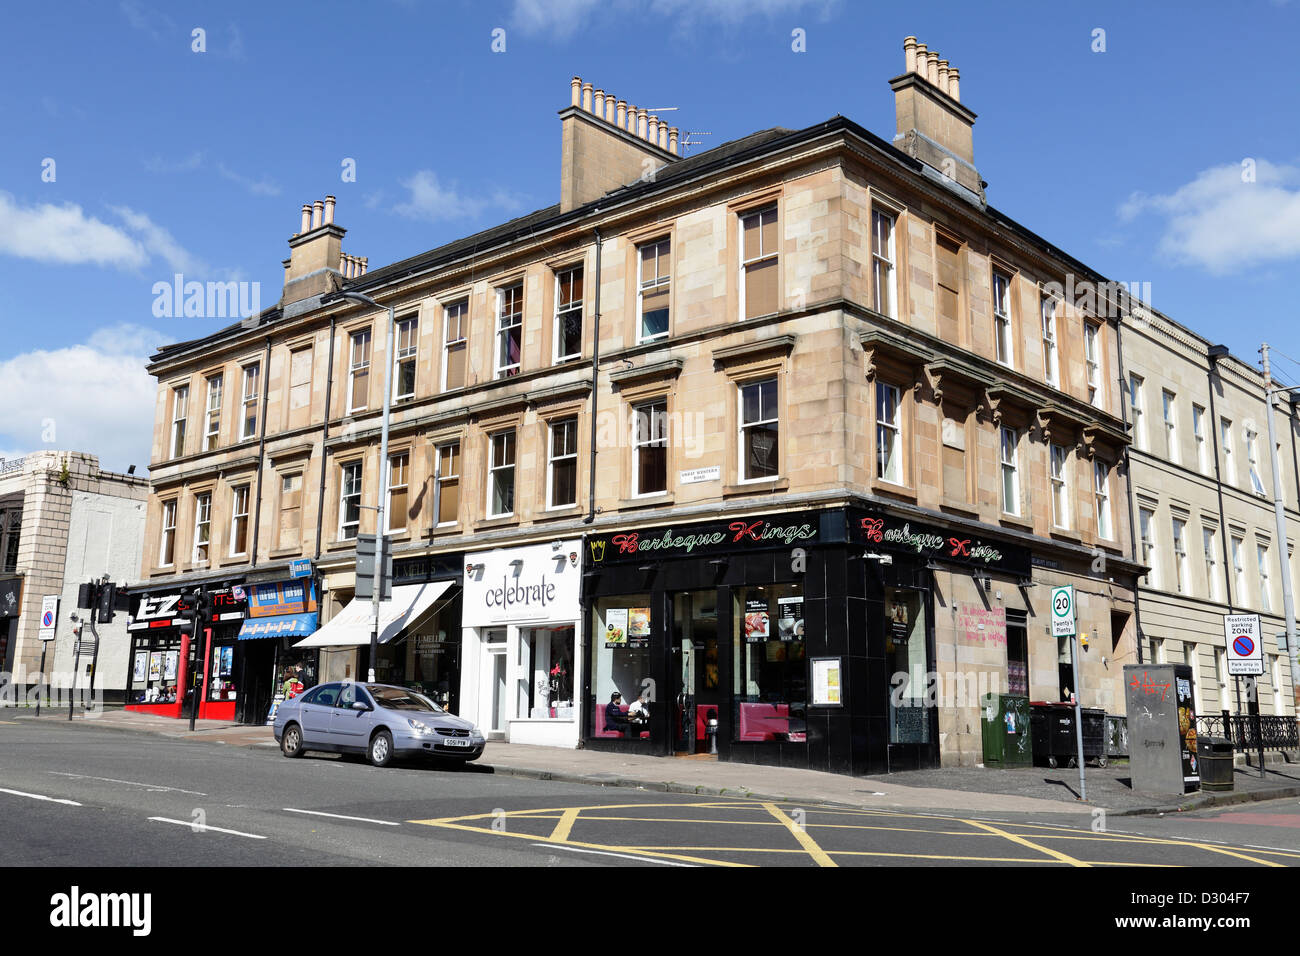 Tenement houses on Great Western Road, Scotland, UK Stock Photo